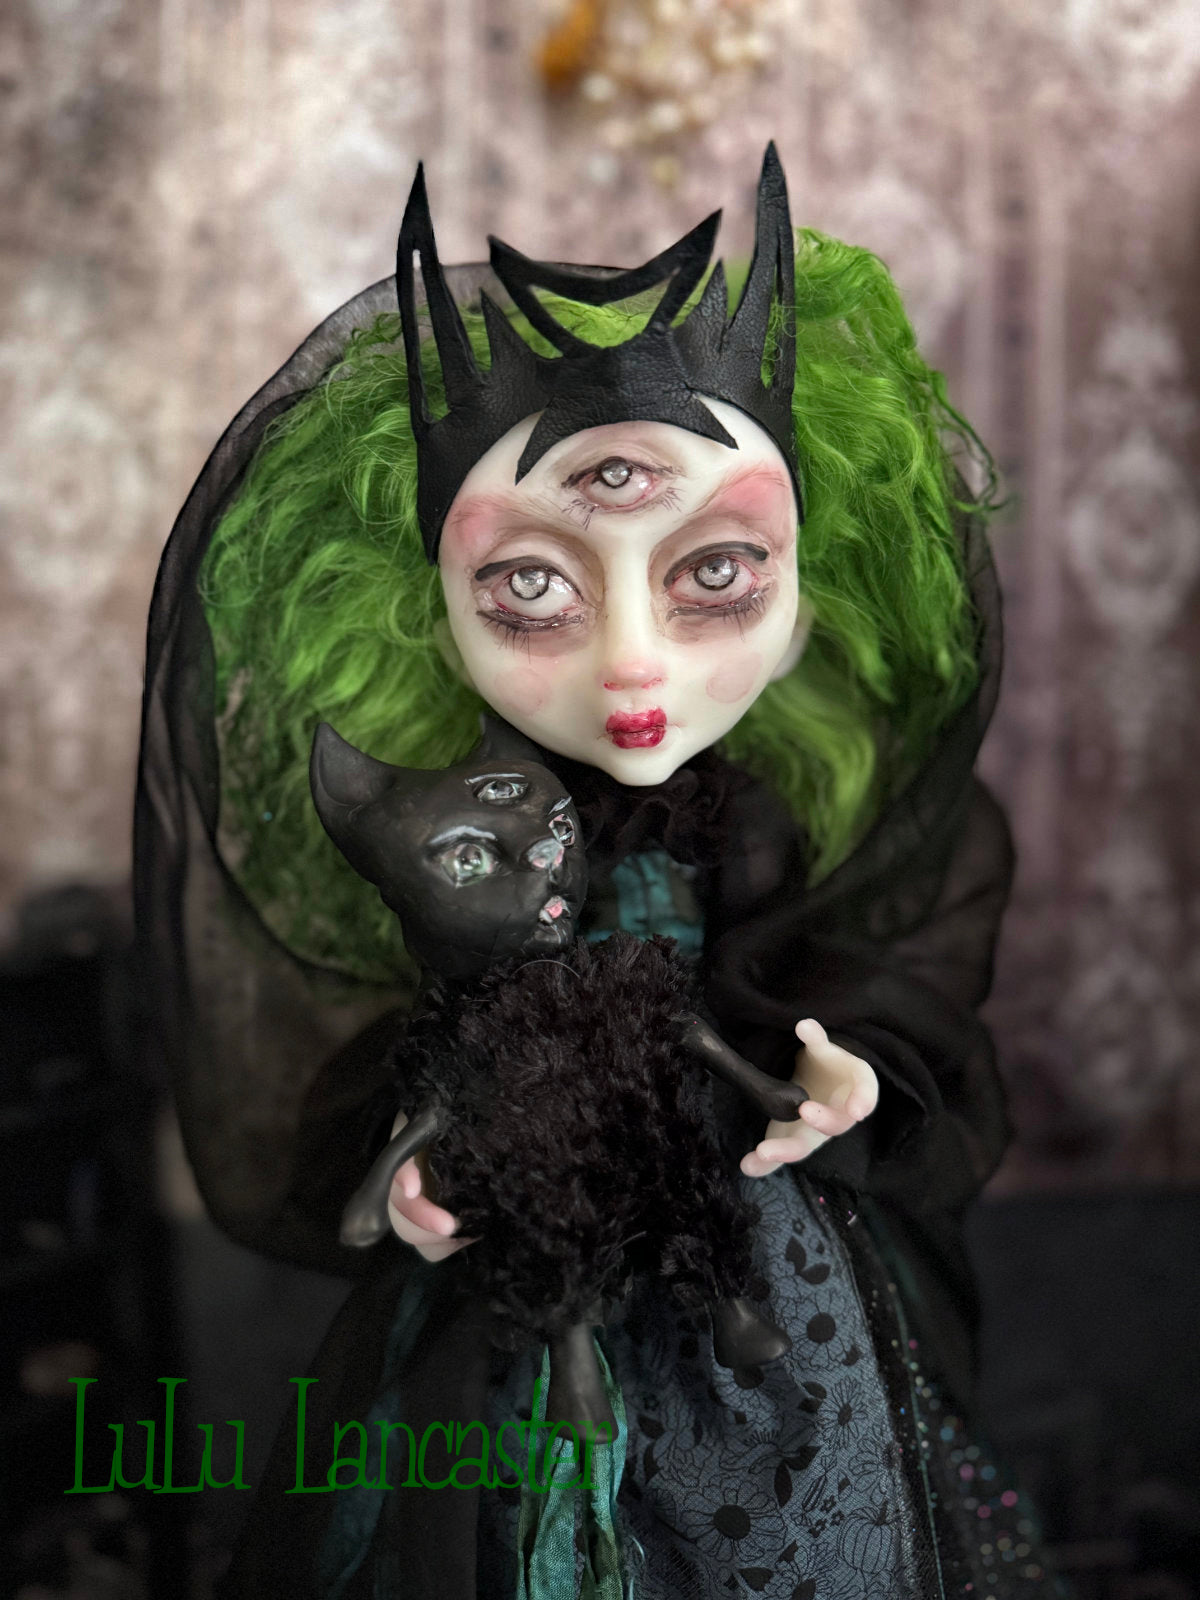 Verity the 3rd eye Witch Original LuLu Lancaster Art Doll